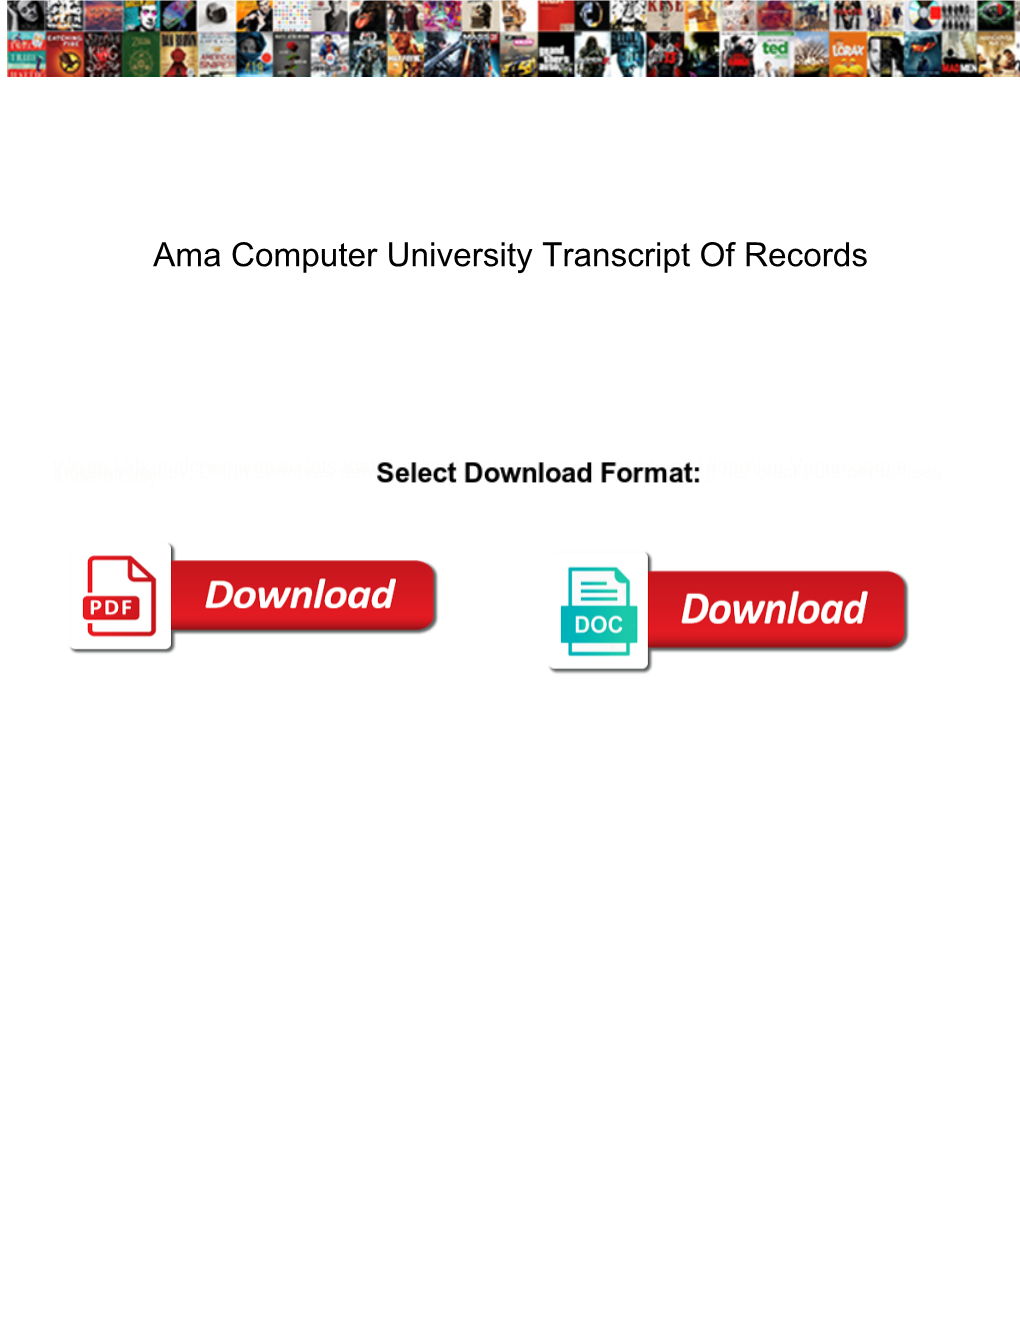 Ama Computer University Transcript of Records